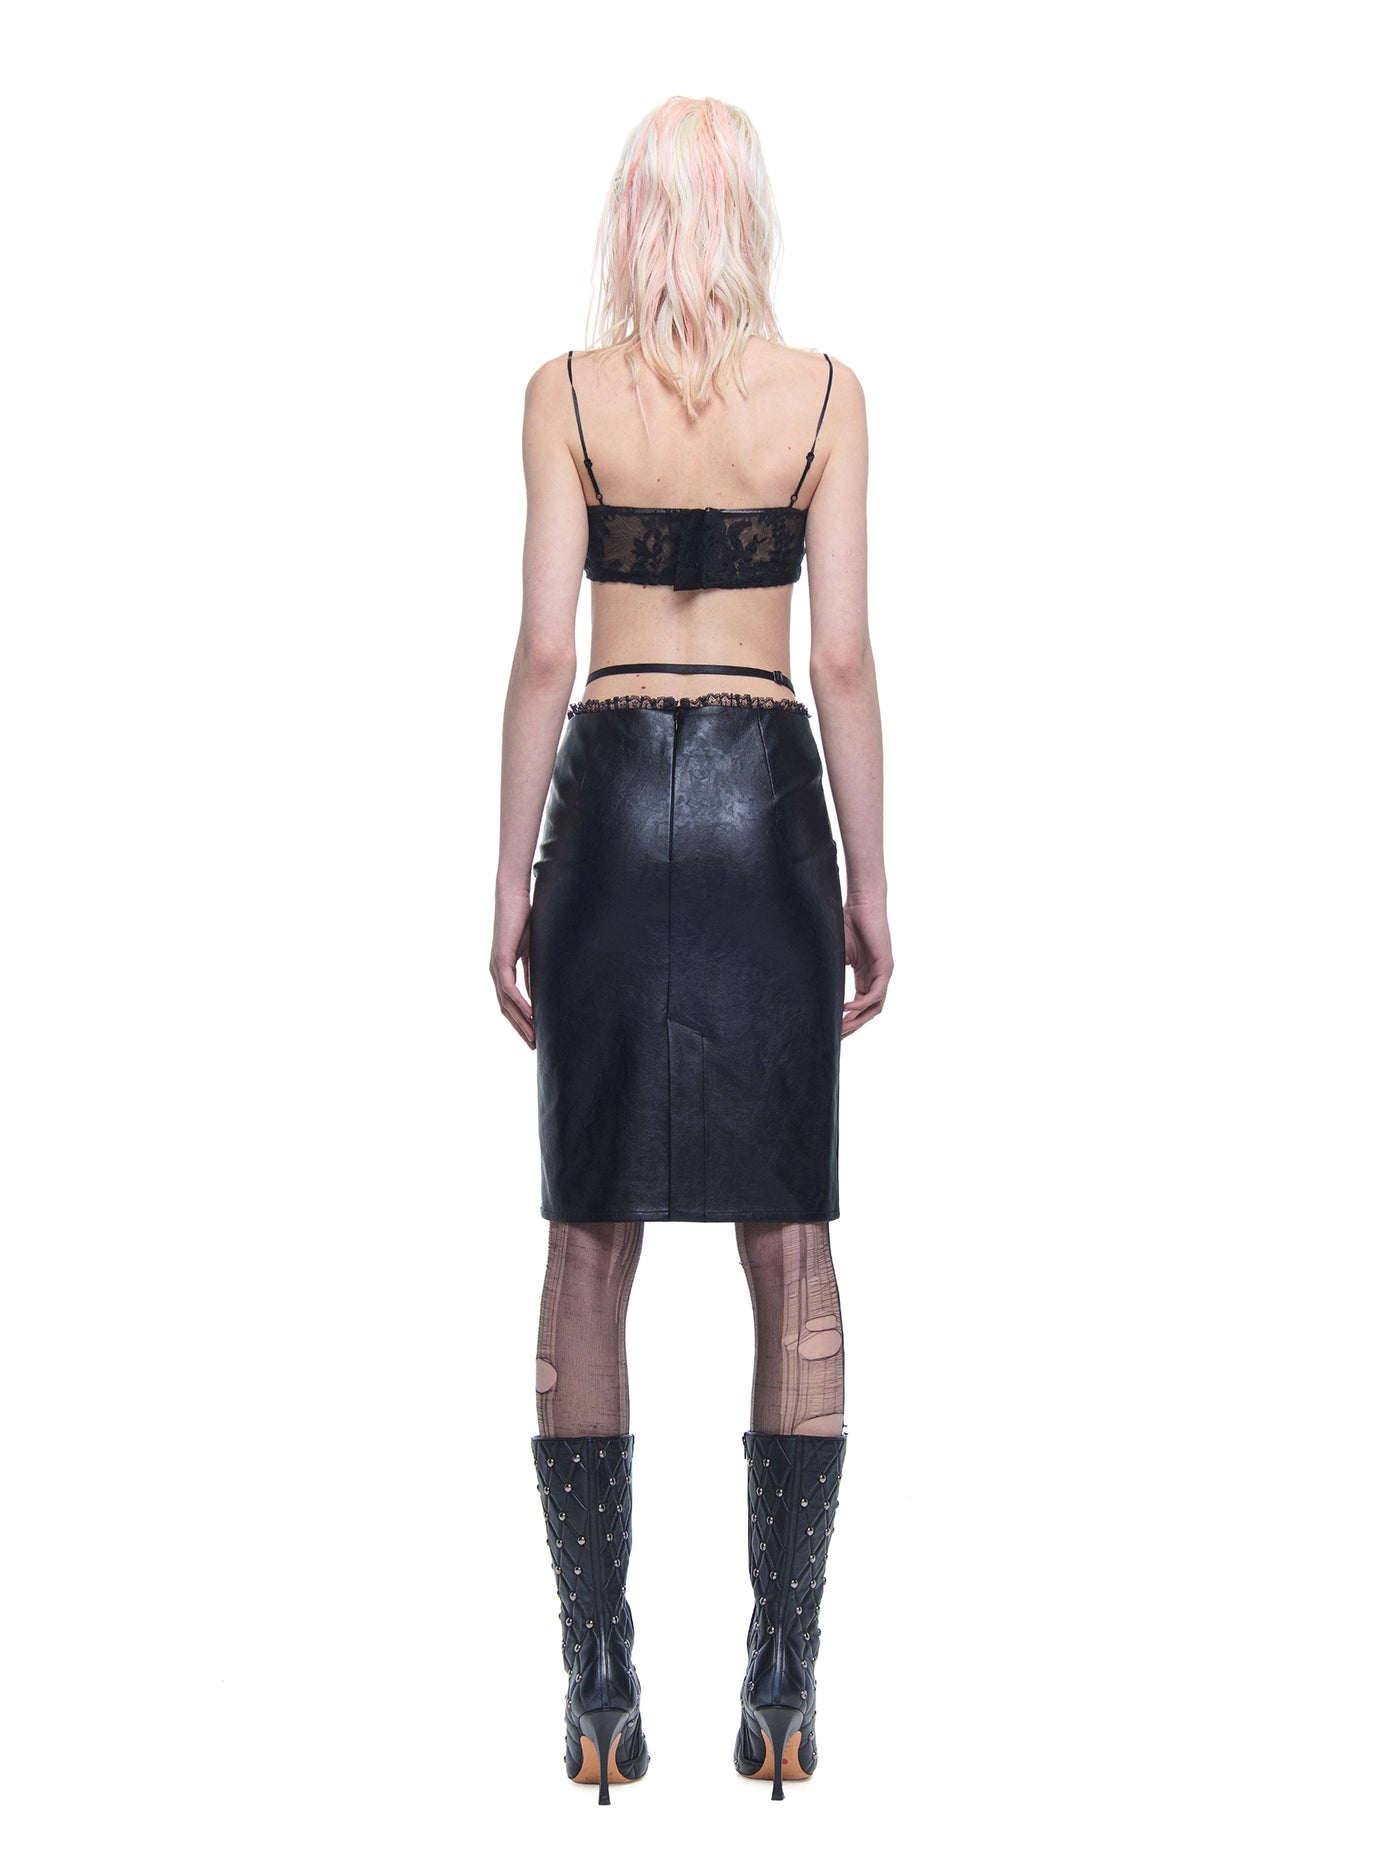 Face Print Street Style Tight Skirt ANS0056